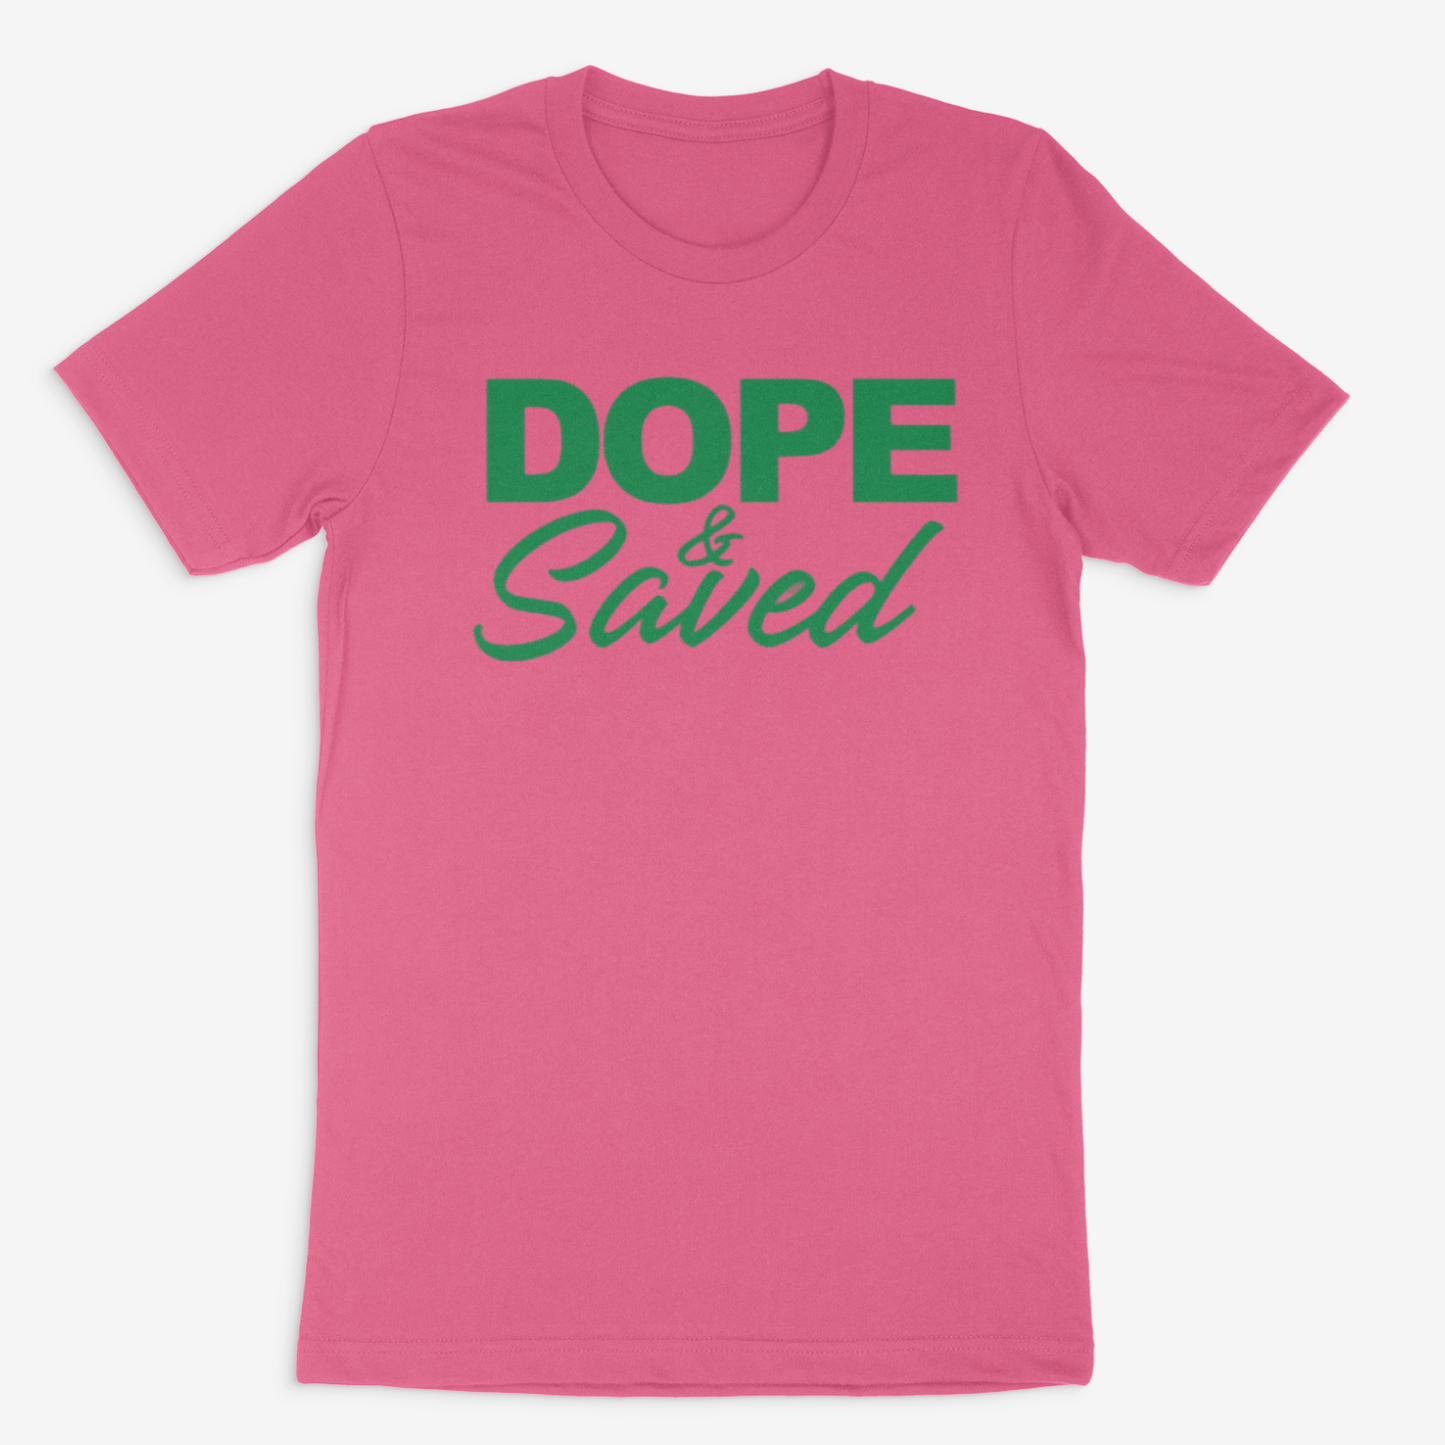 Dope and Saved Tee ( Green)